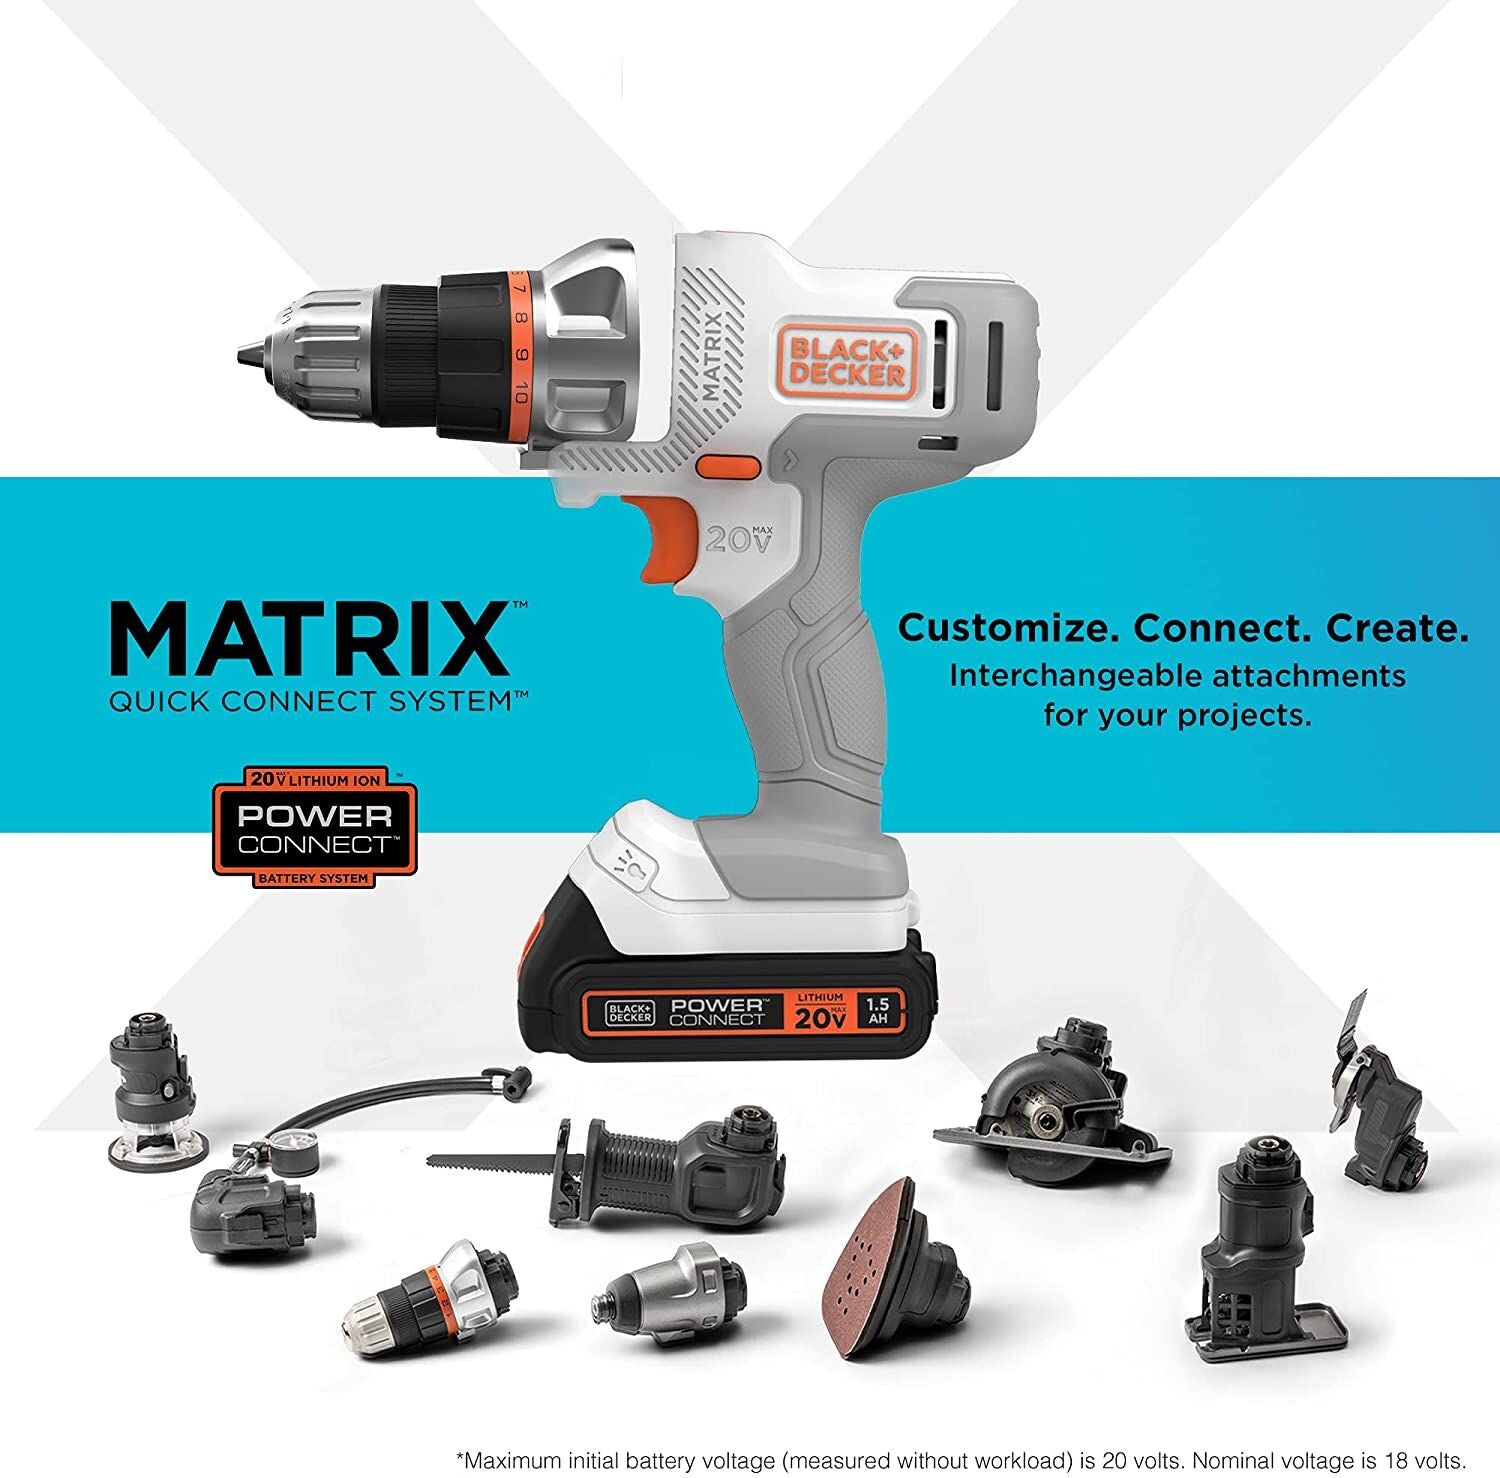  BLACK+DECKER 20V MAX Matrix Cordless Drill/Driver Kit, White  (BDCDMT120WC1FF) : Tools & Home Improvement